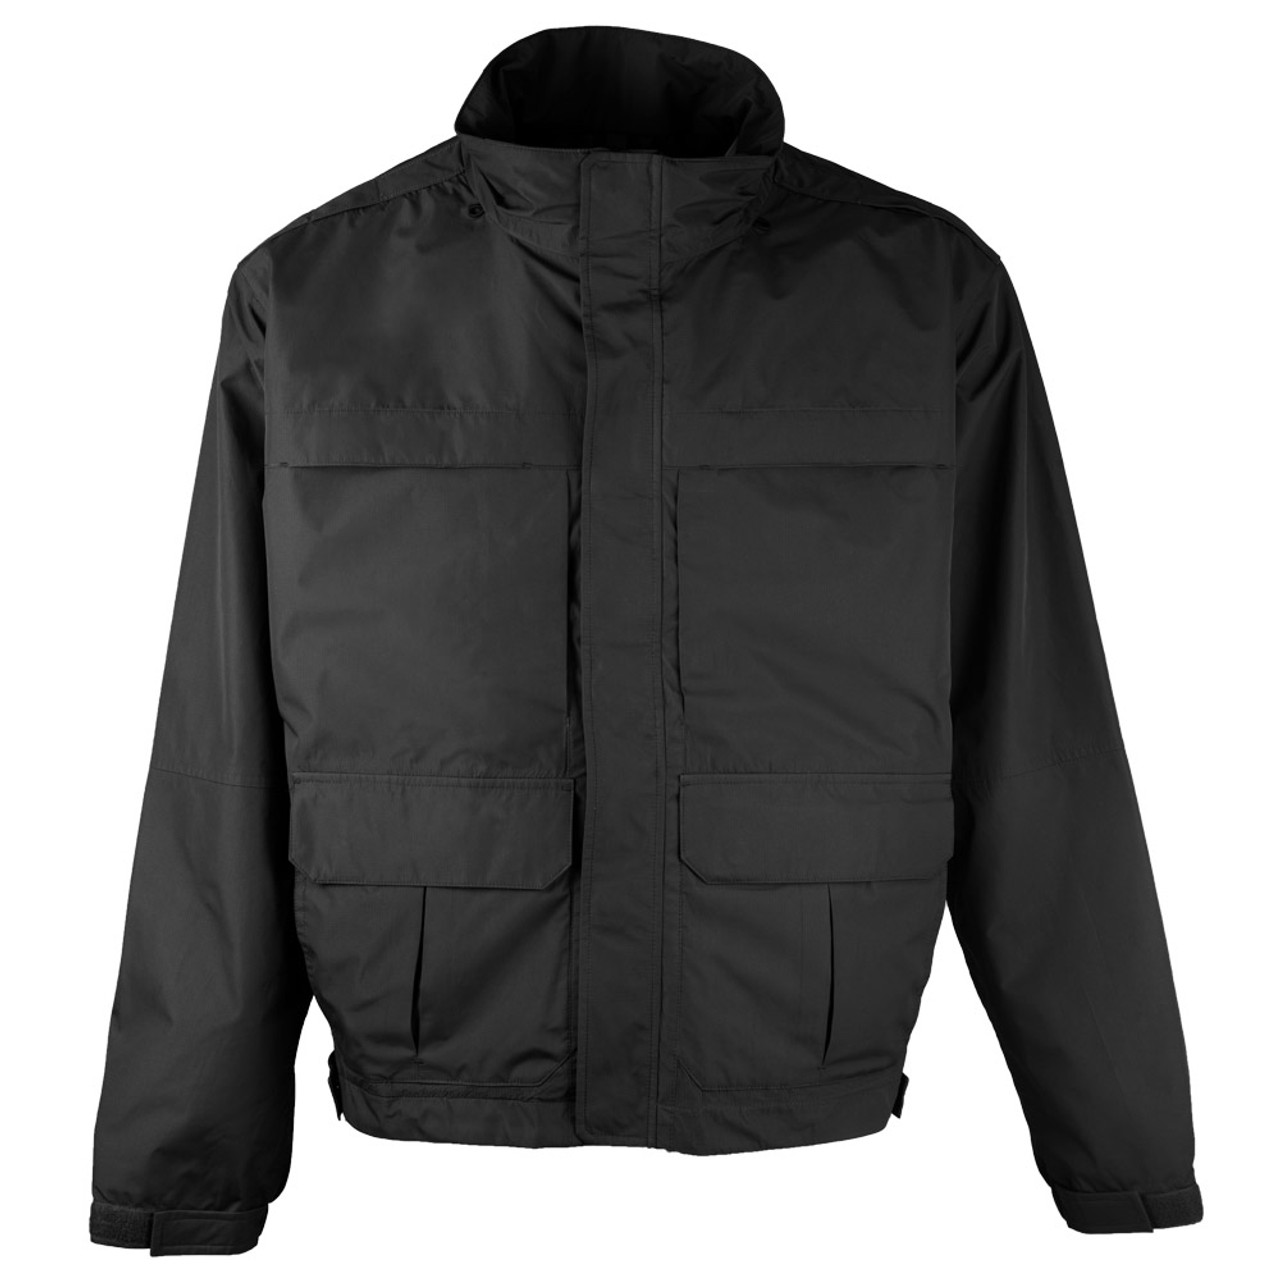 Tact Squad UM5357 Black Versa Duty Jacket, 3-in-1: shell/fleece-lined ...